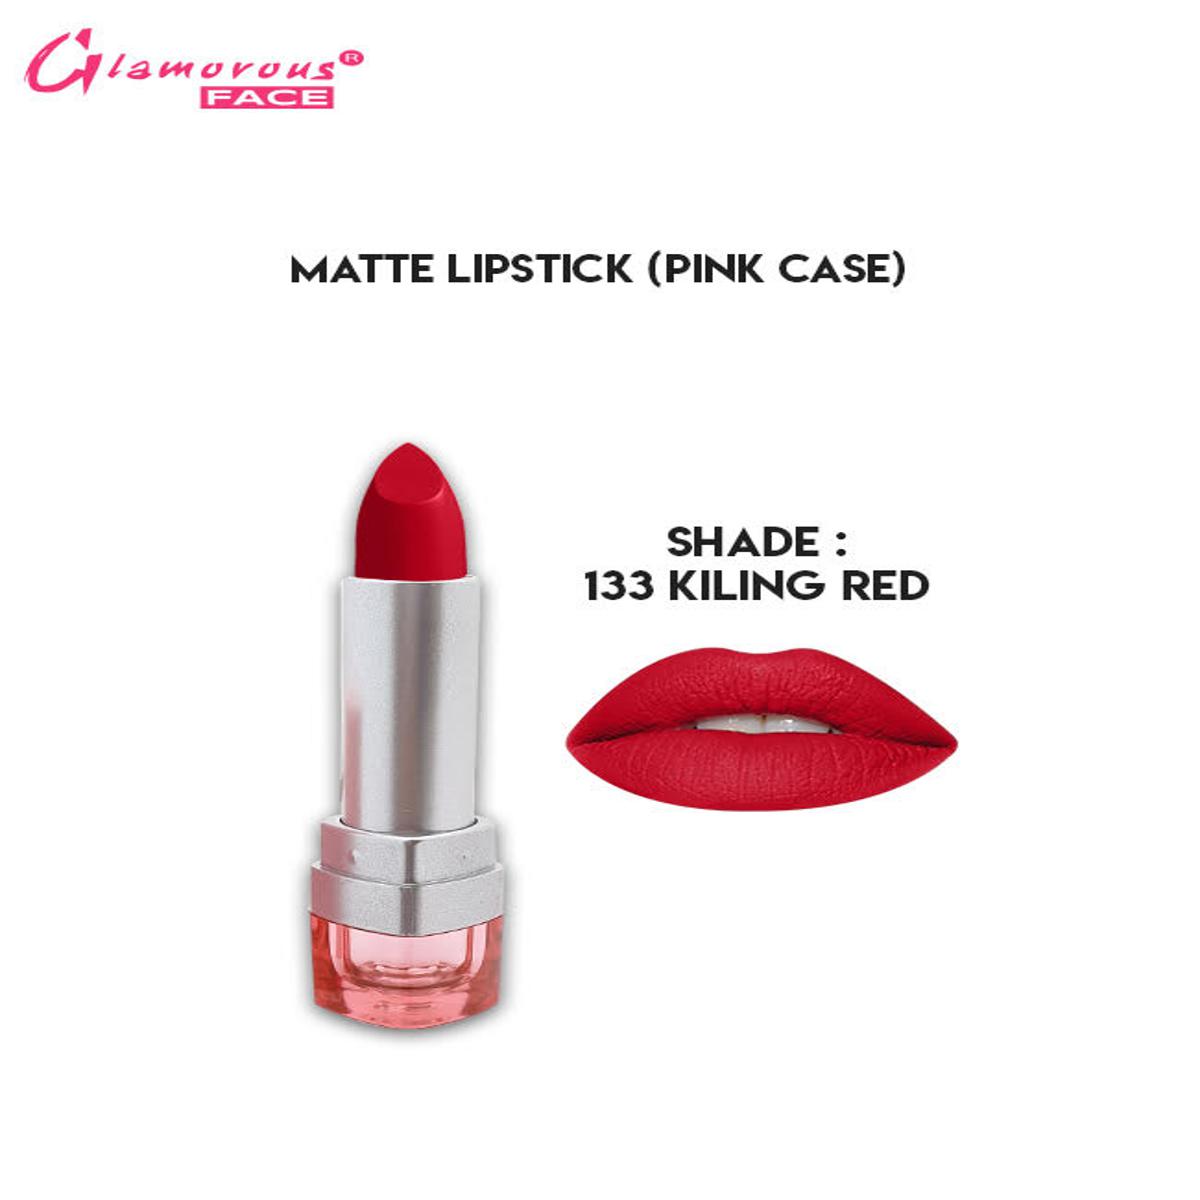 Glamorous Face Matte Lipstick Pink Case Vitamin E & Aloe Vera Exracts, Lip  Makeup, Matte Finish, Hydrating Lipstick, Nude, Pink, Red, Plum Lip Color,  Peach Buff, Matte Longwear, Super Stay, Comfortable Lipstick.: